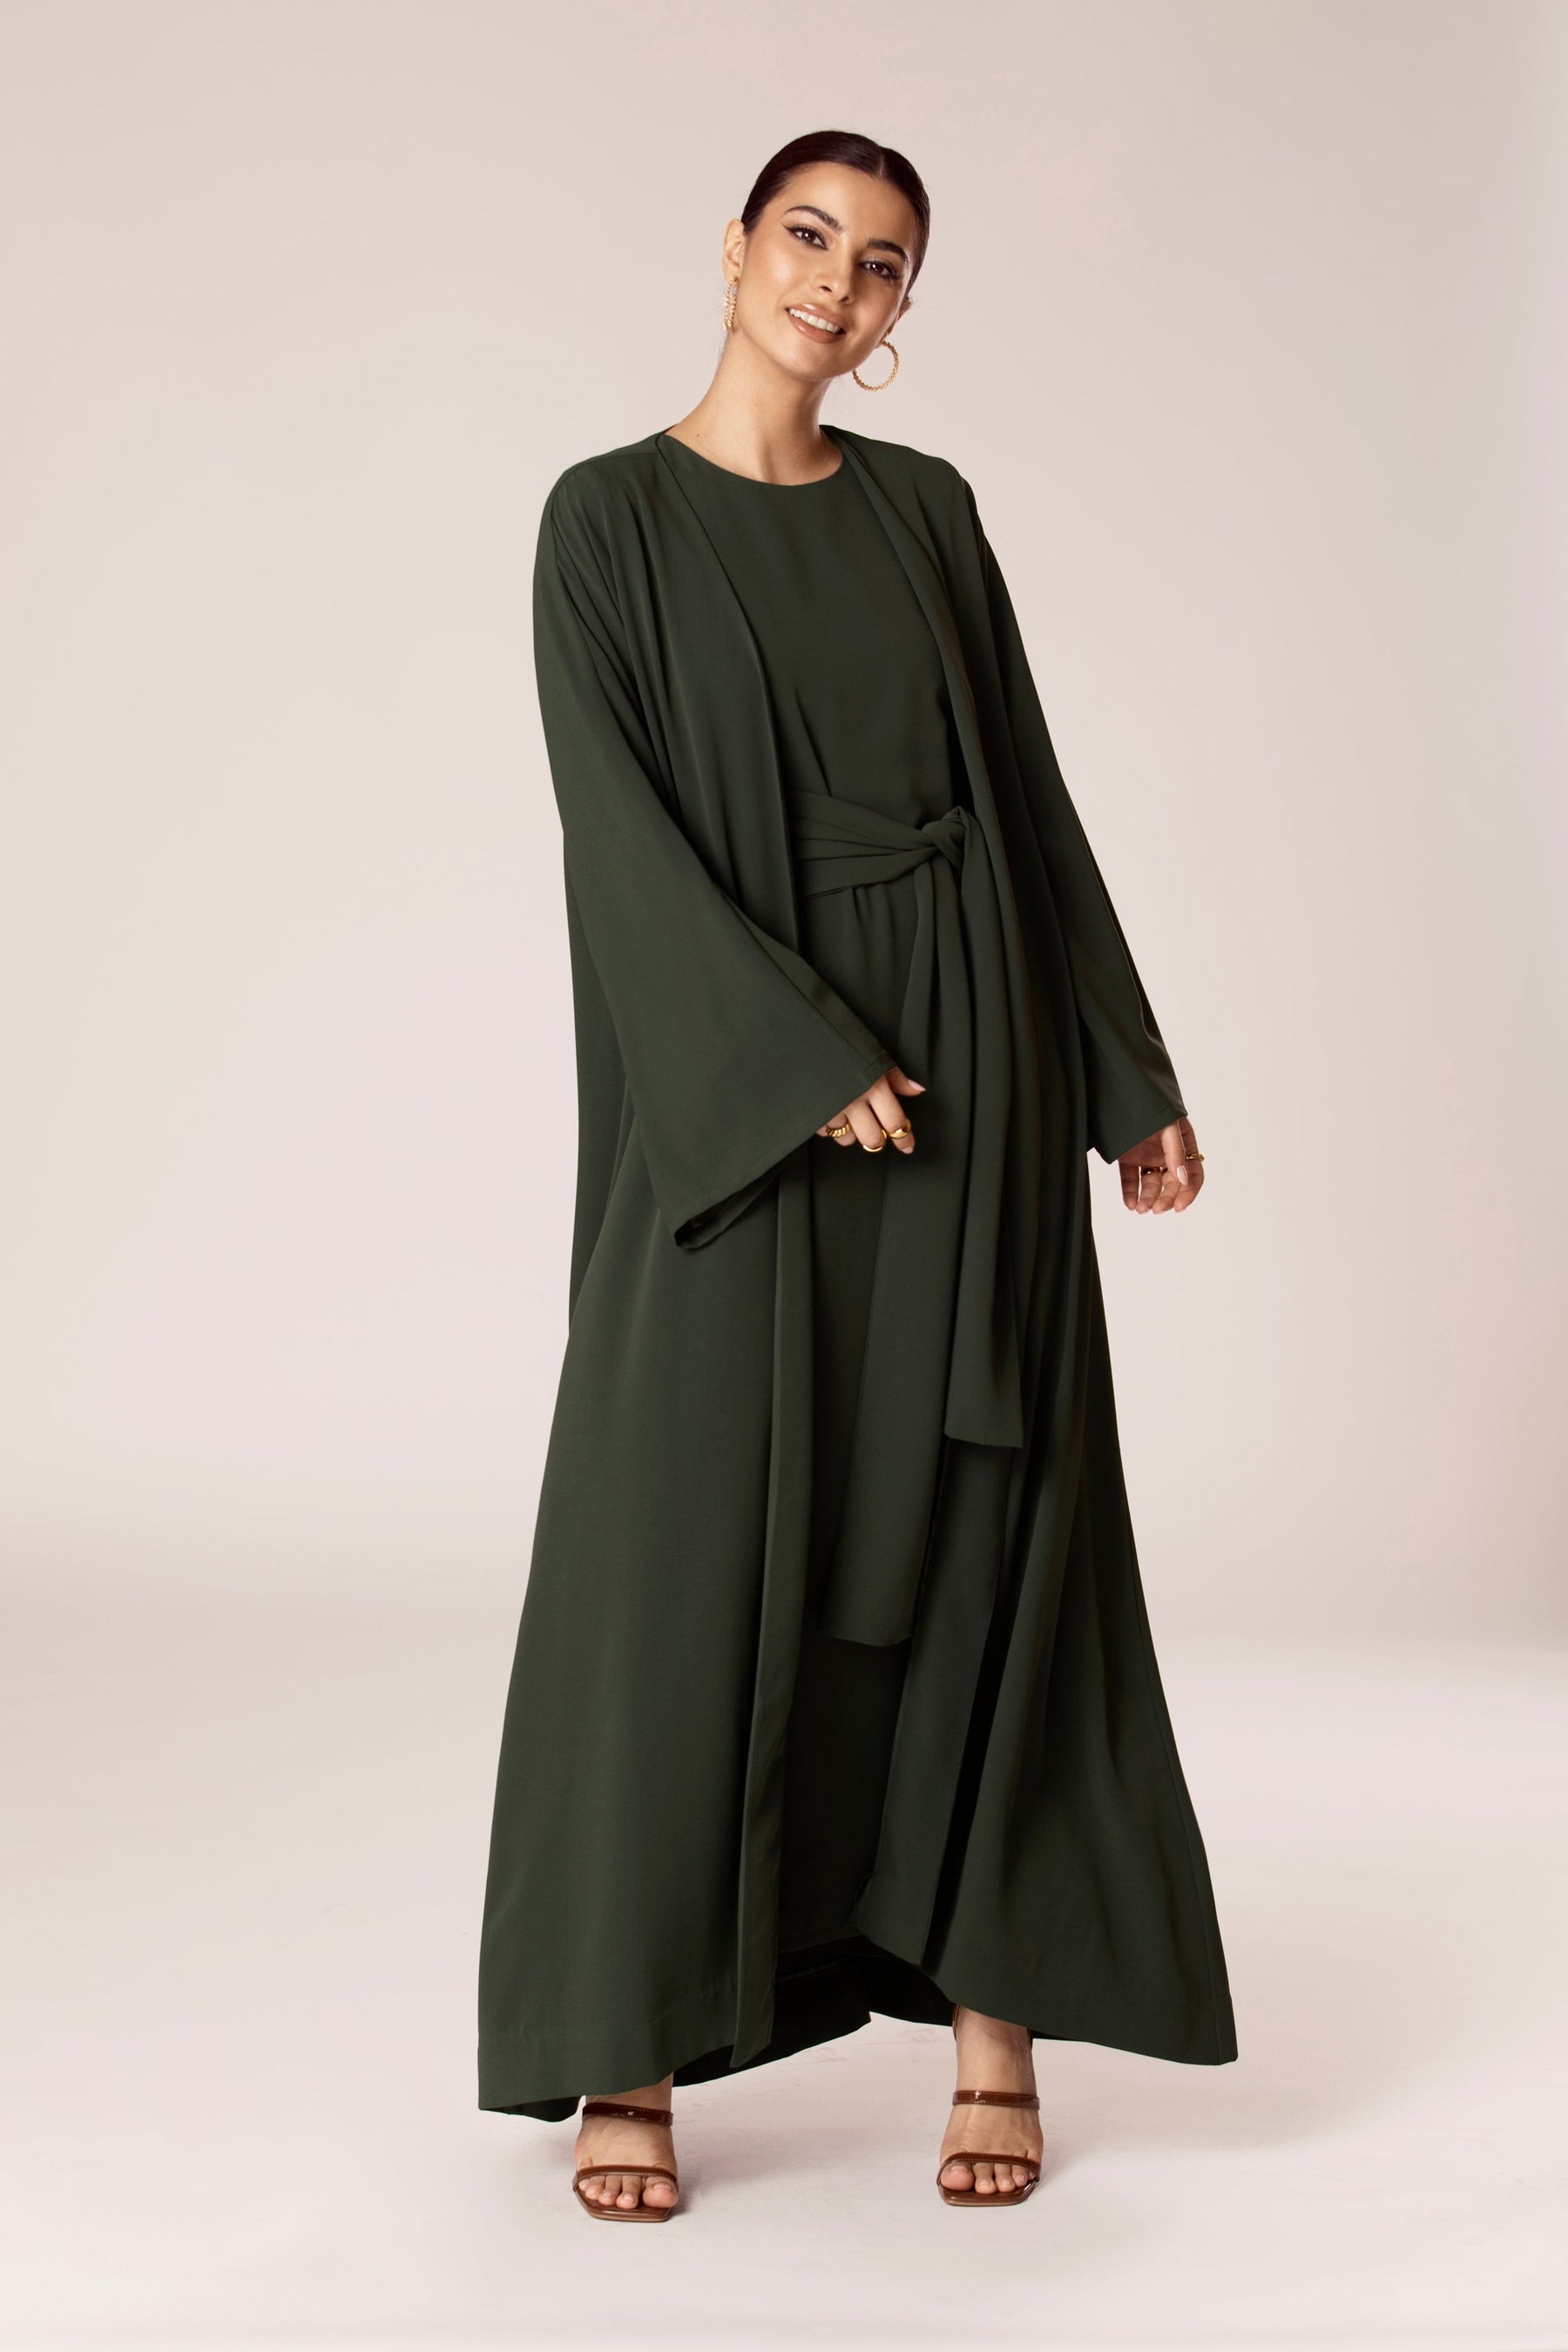 Isabella Open Abaya - Dark Emerald Veiled Collection 